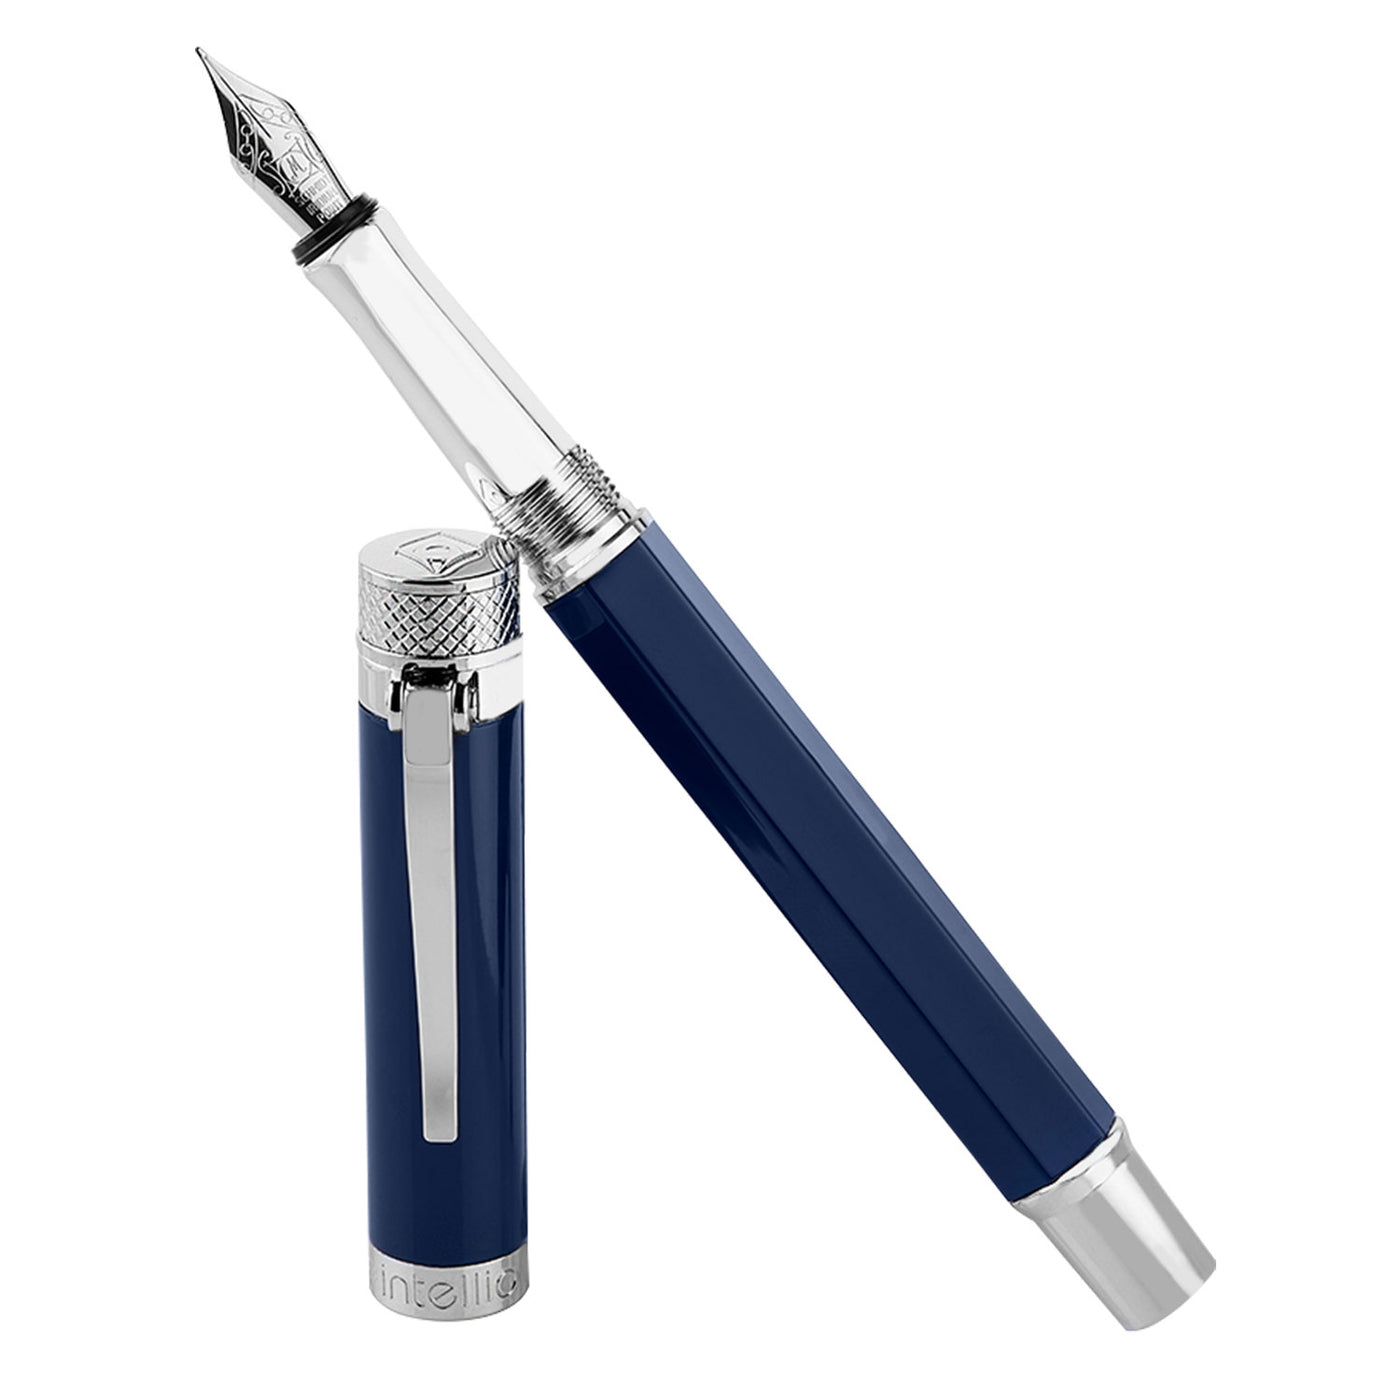 Intellio Jewel Fountain Pen - Starry Blue CT 6